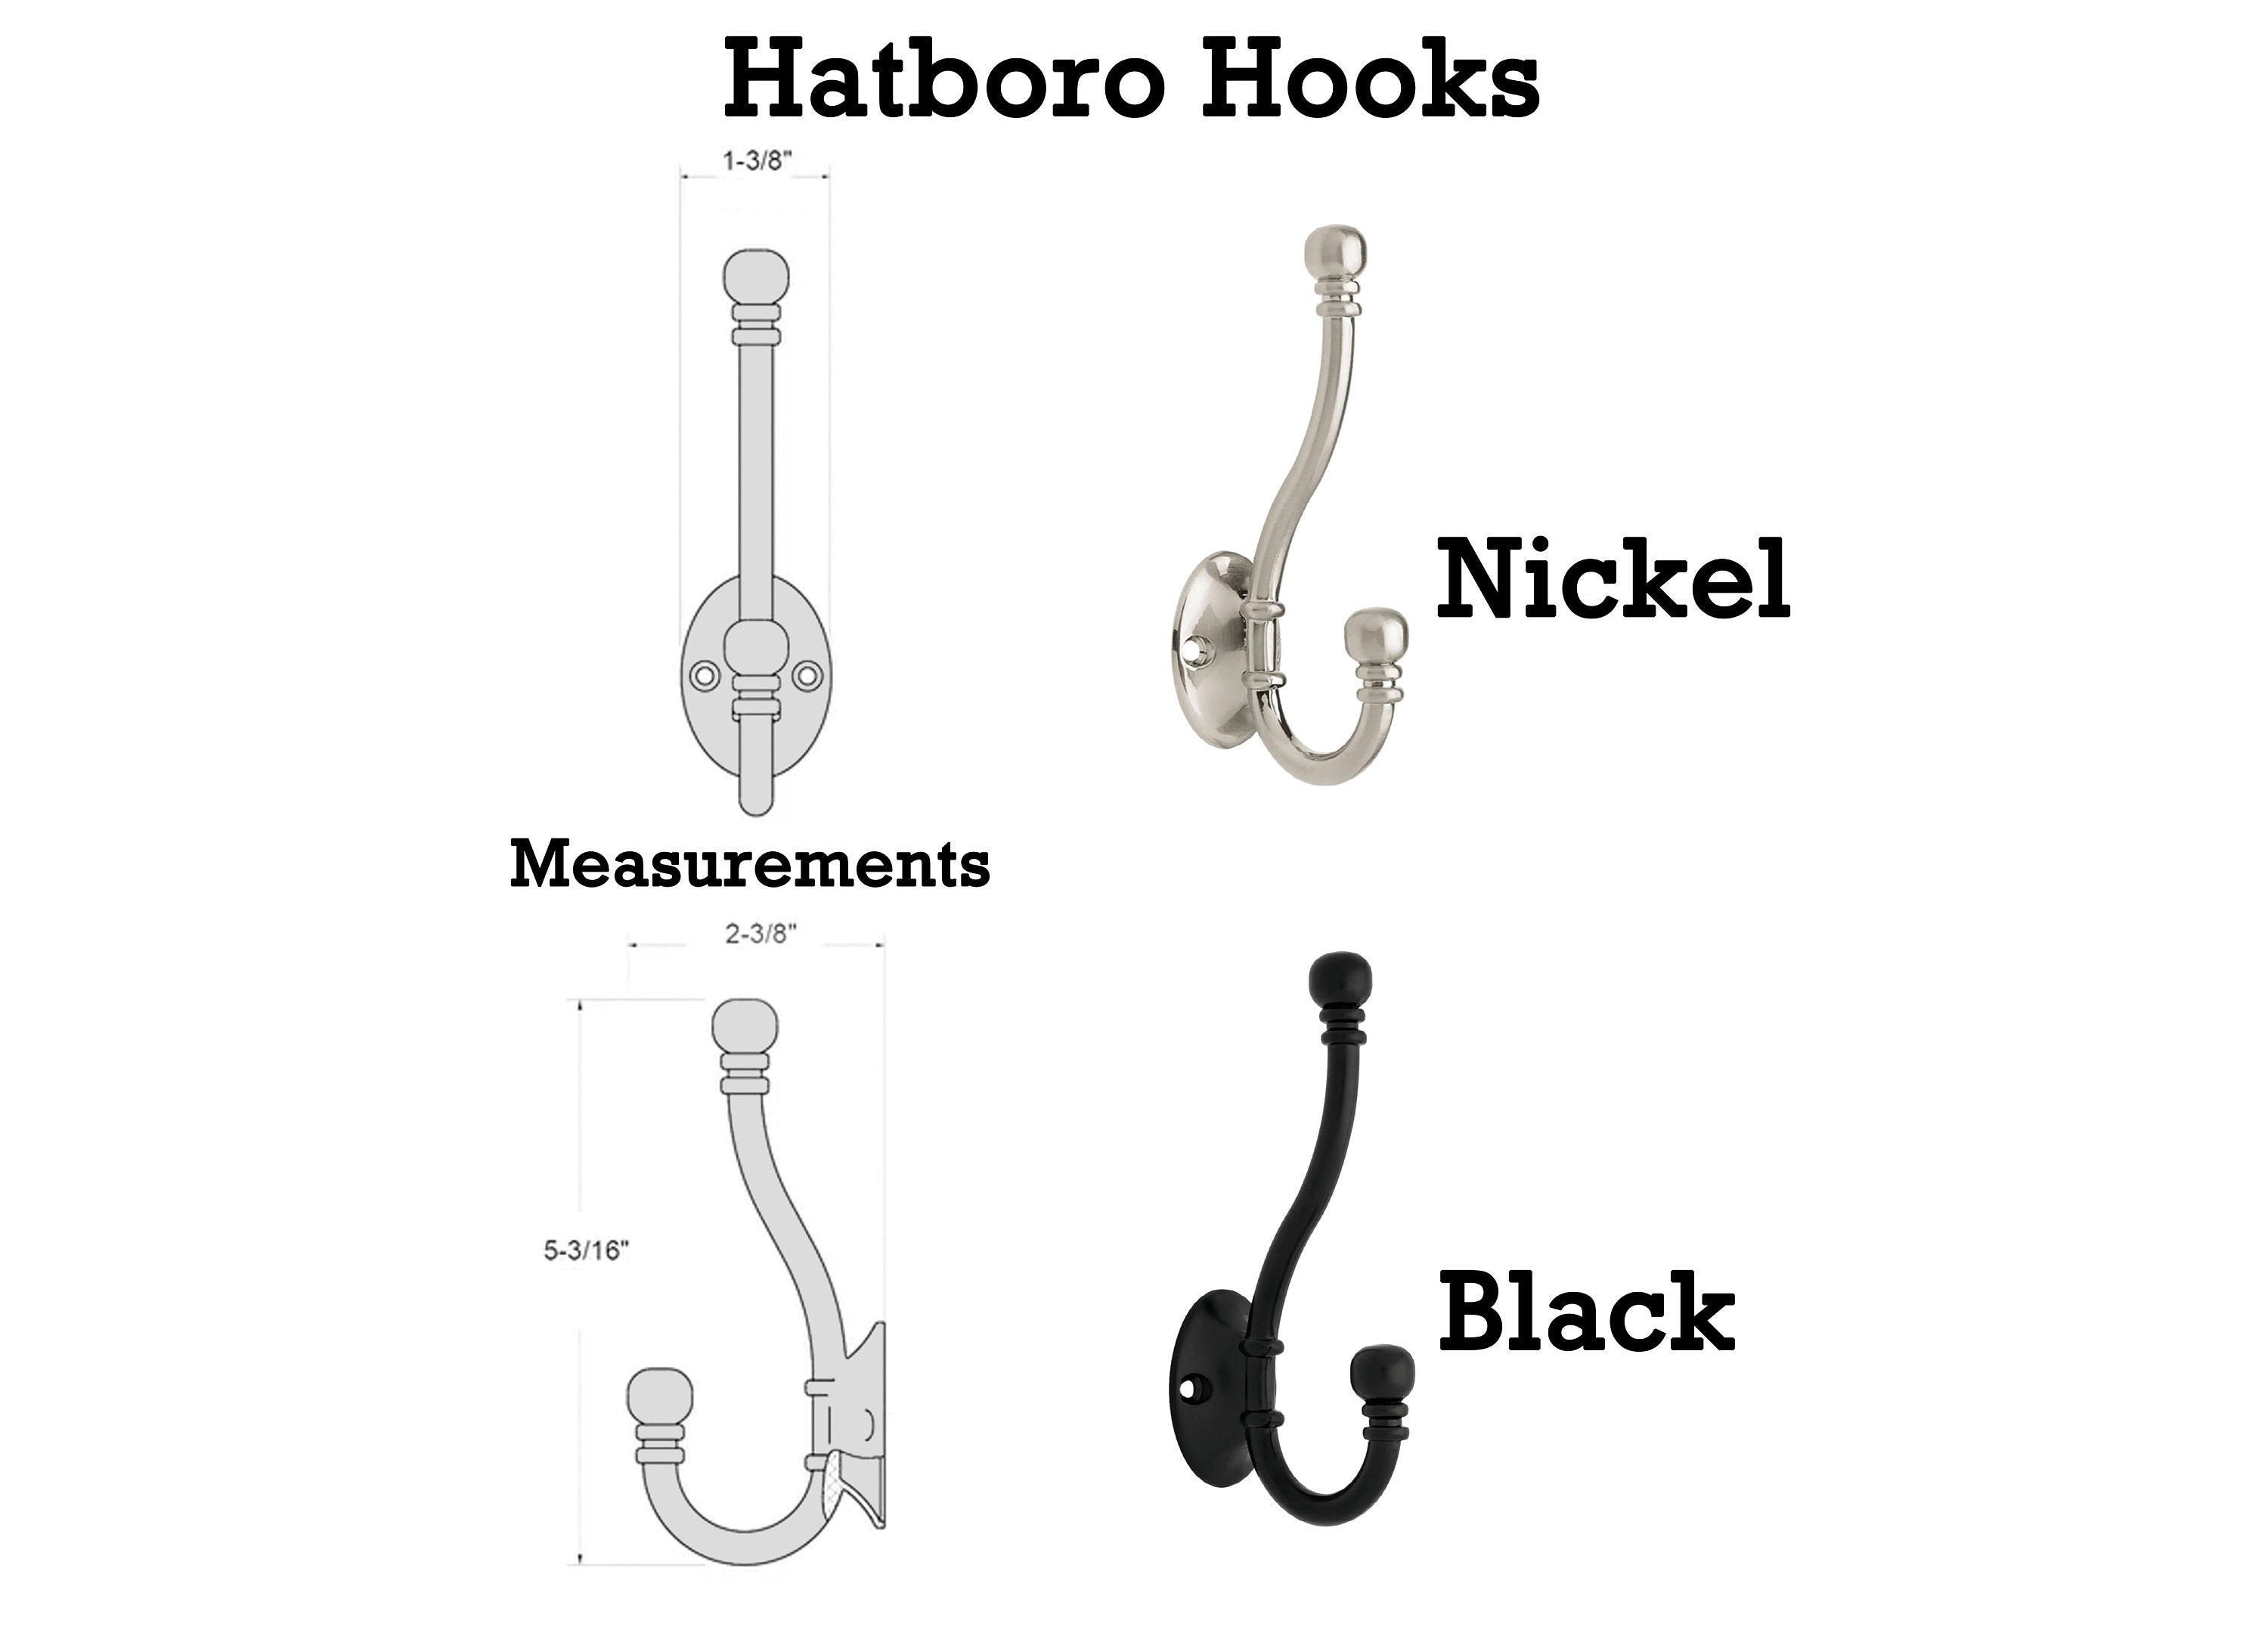 Hatboro Hooks Finish, Silver or Black